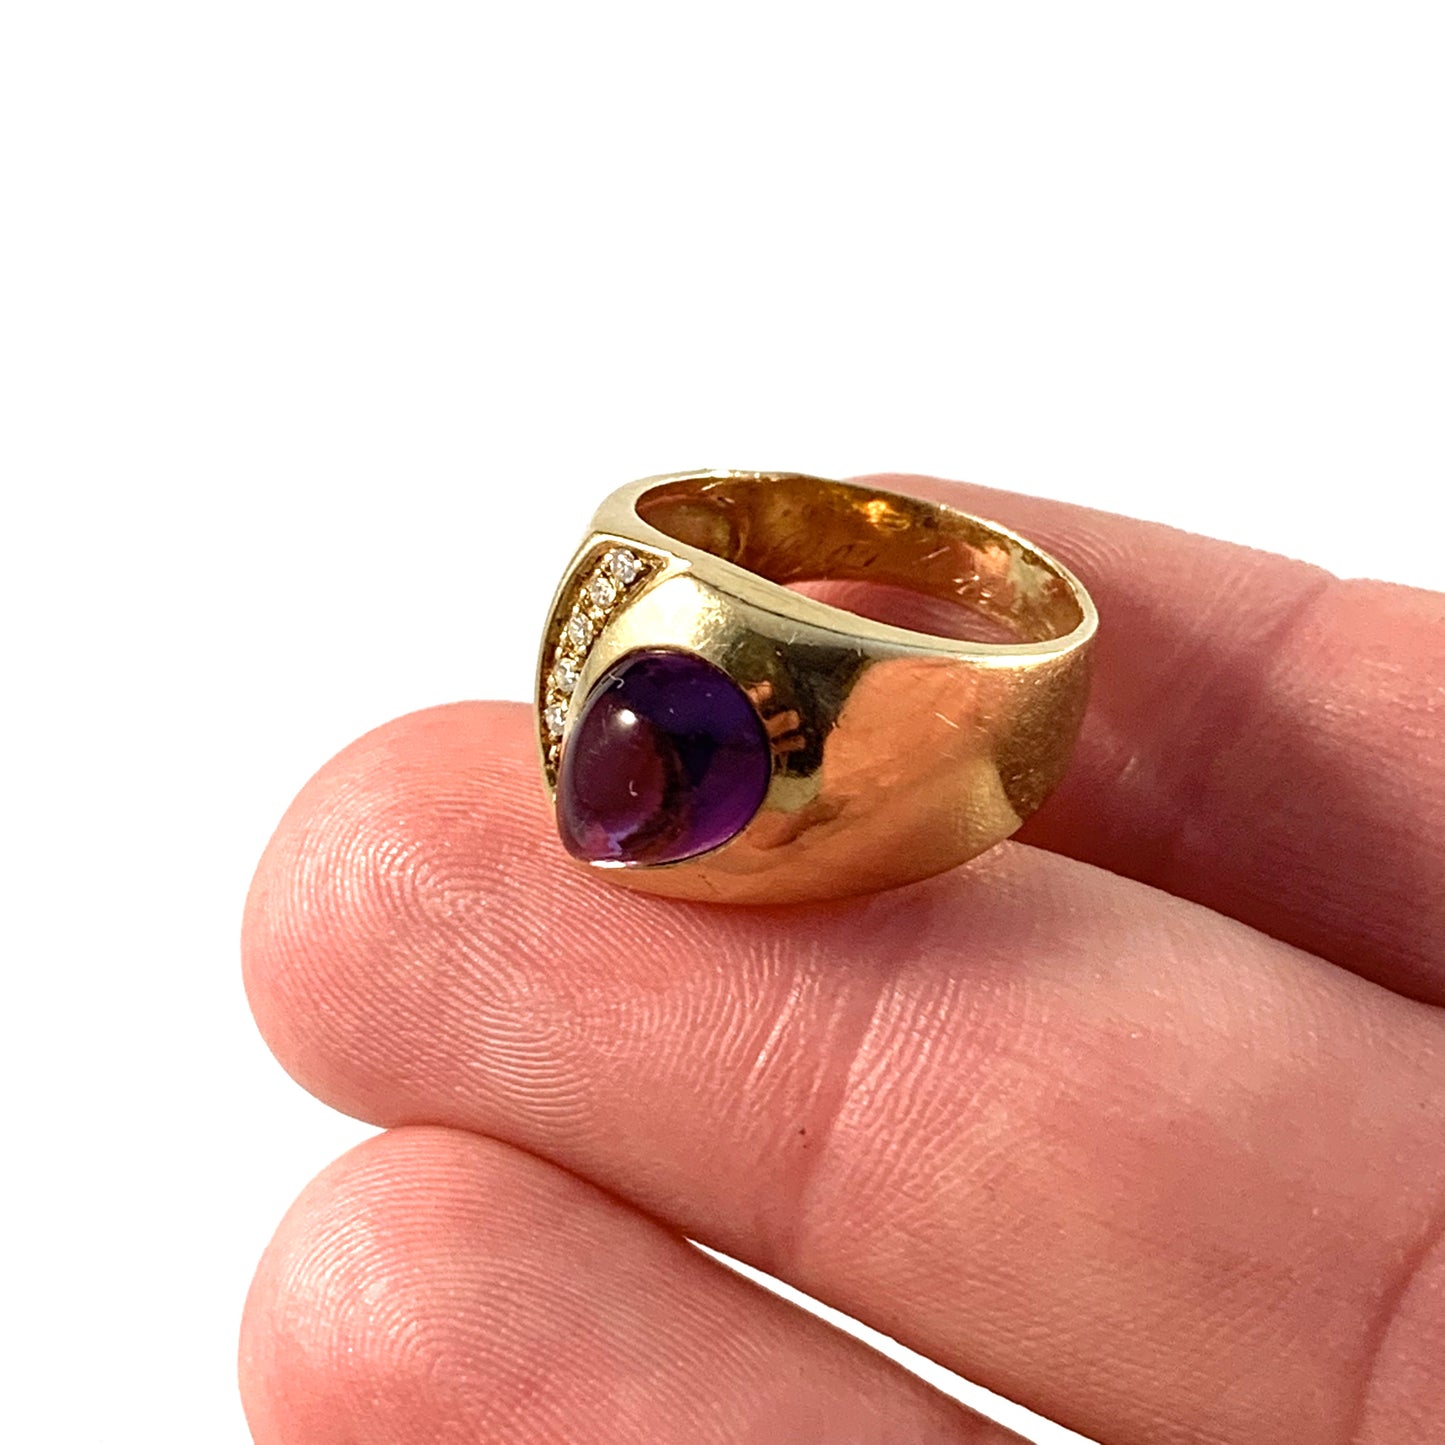 Sweden, Vintage 18k Gold Amethyst Diamond Ring.